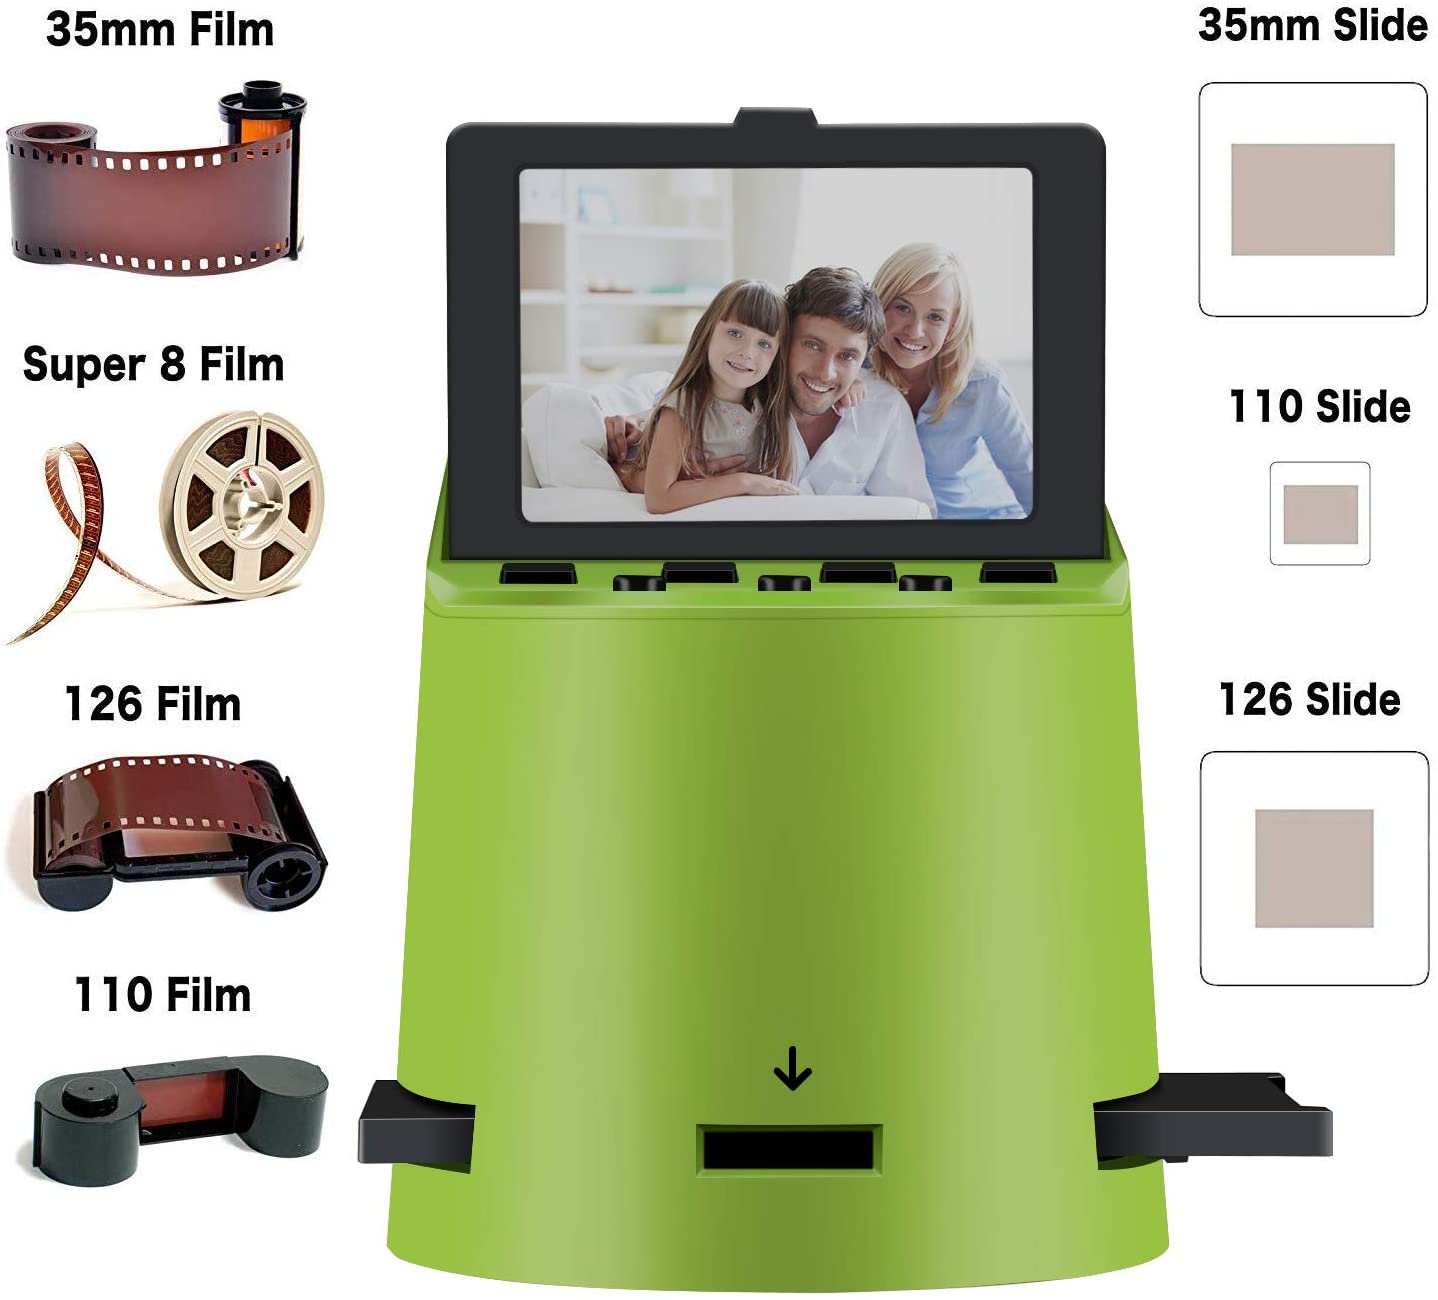 Digital Film Scanner with 22MP Converts 35mm, 126, 110, Super 8 Films